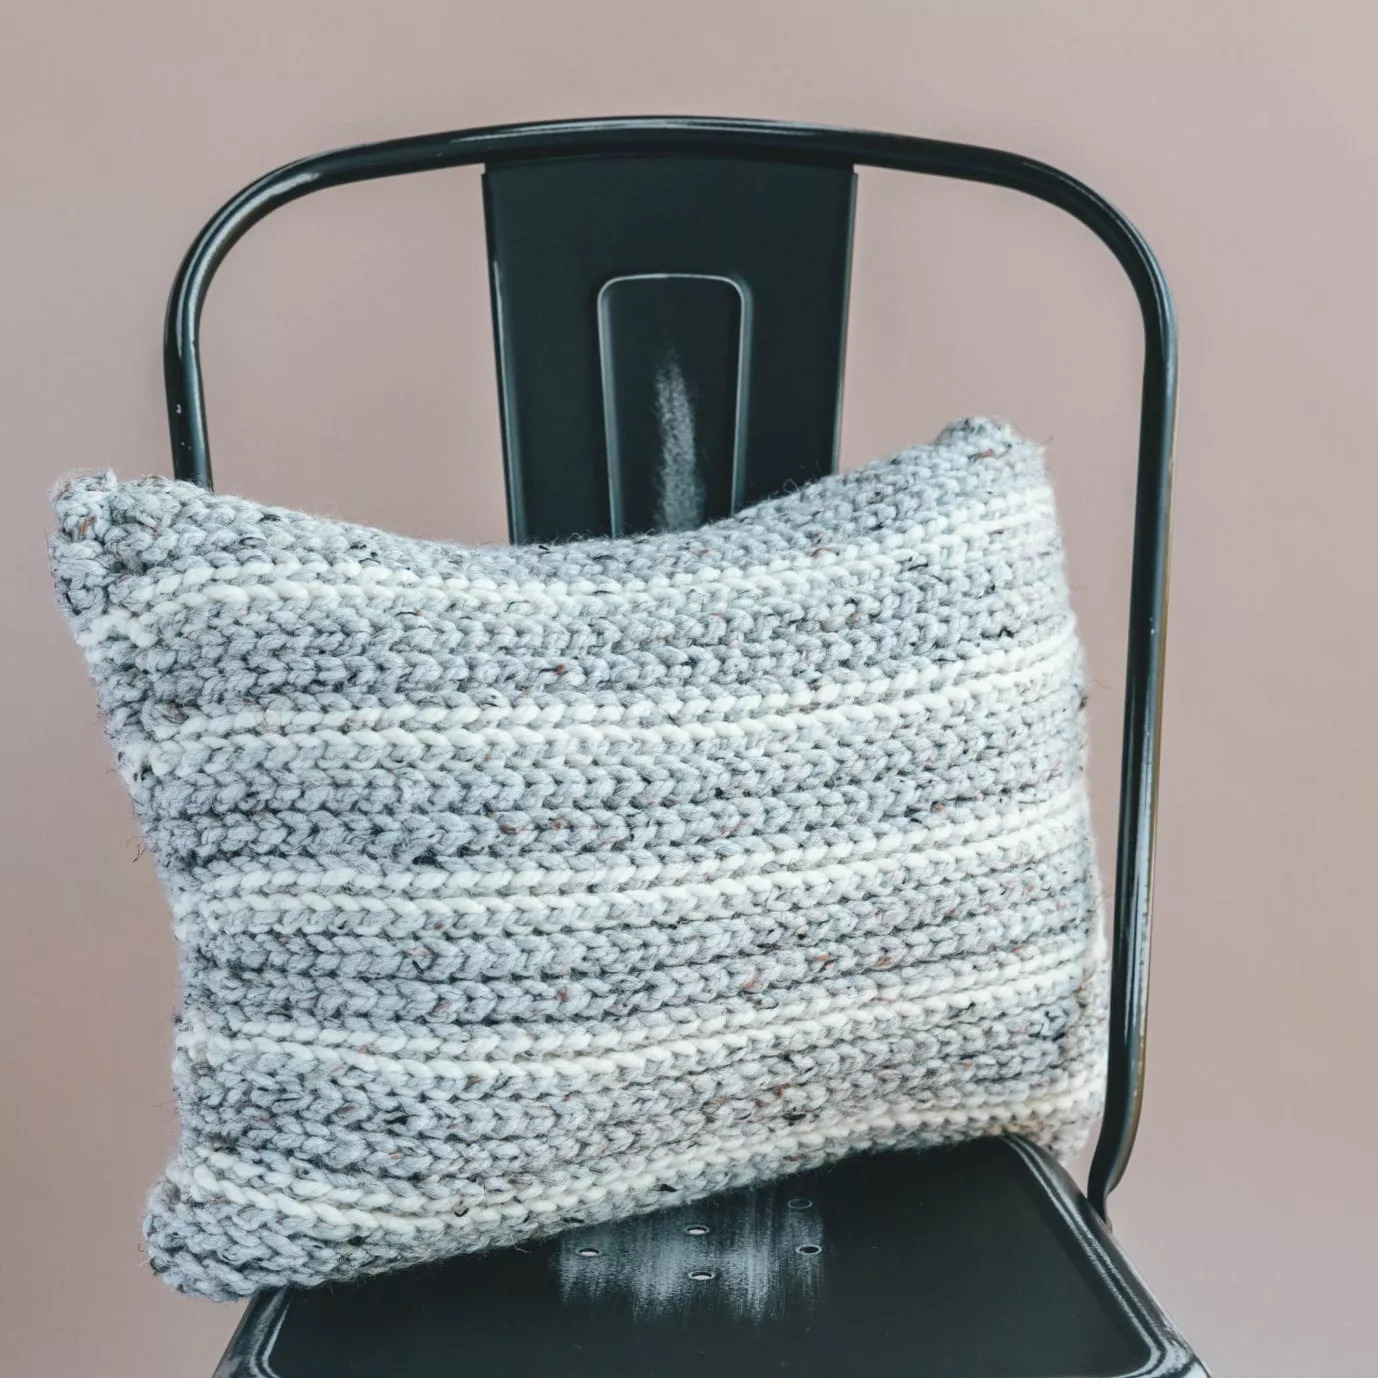 Crochet a Pillow That Looks Like Knitting